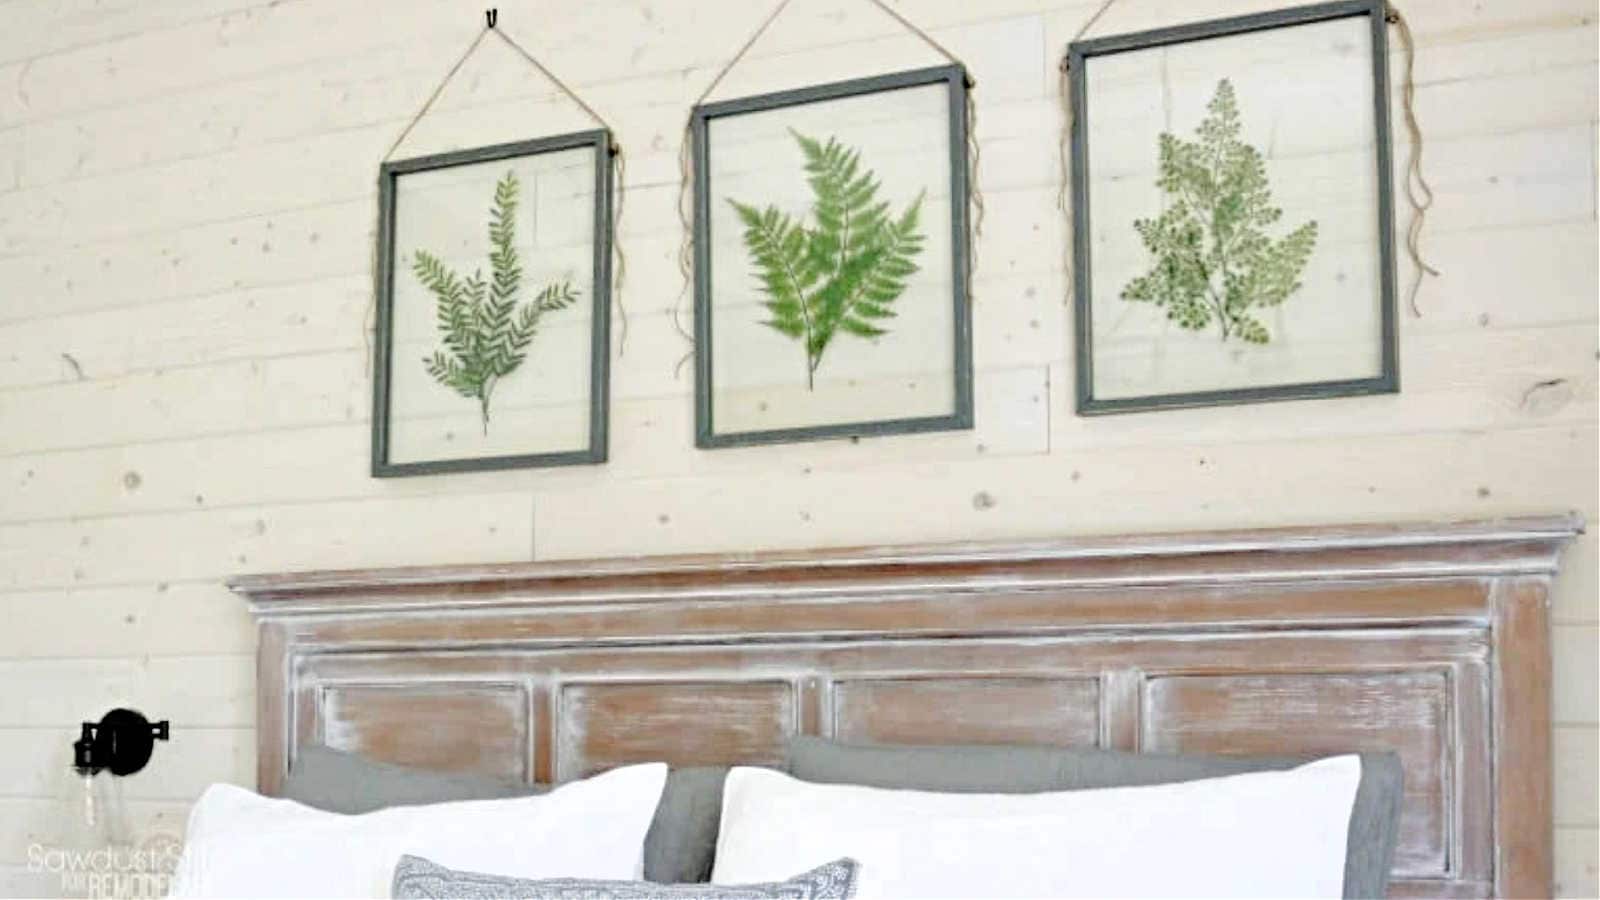 pressed plant frames for botanical decor